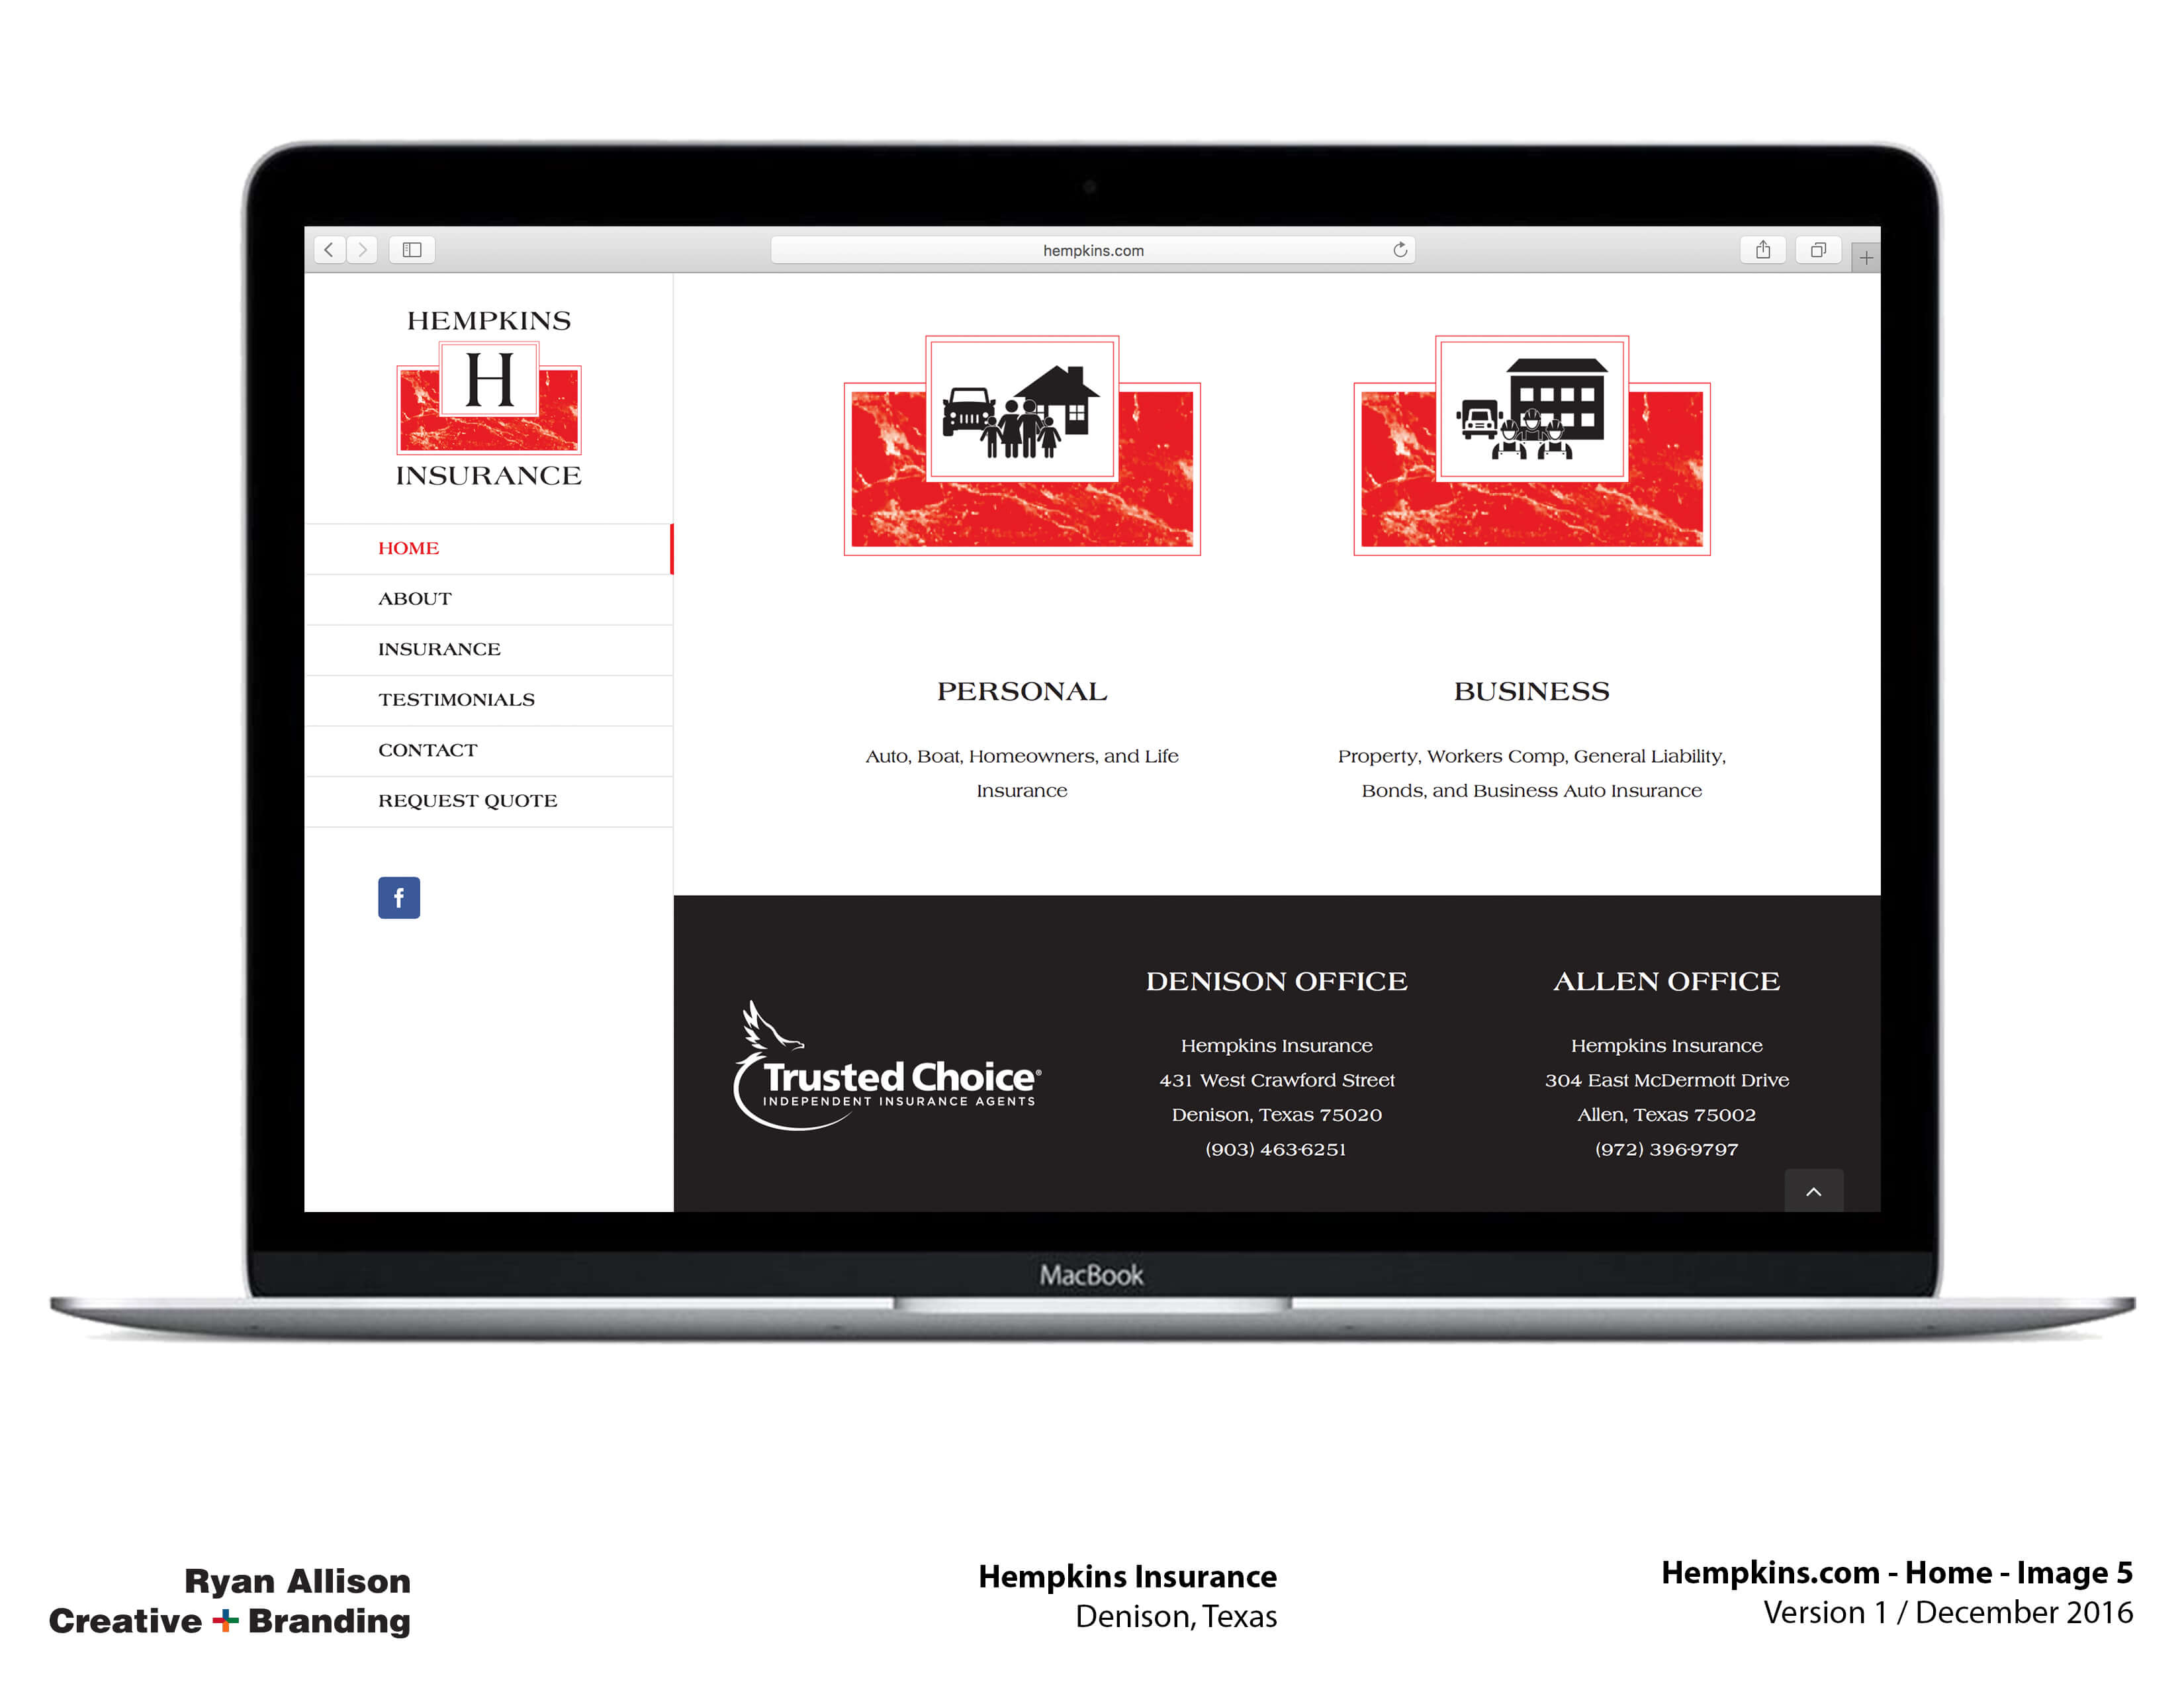 Hempkins Insurance Website Home 5 - Project - Ryan Allison Creative + Branding